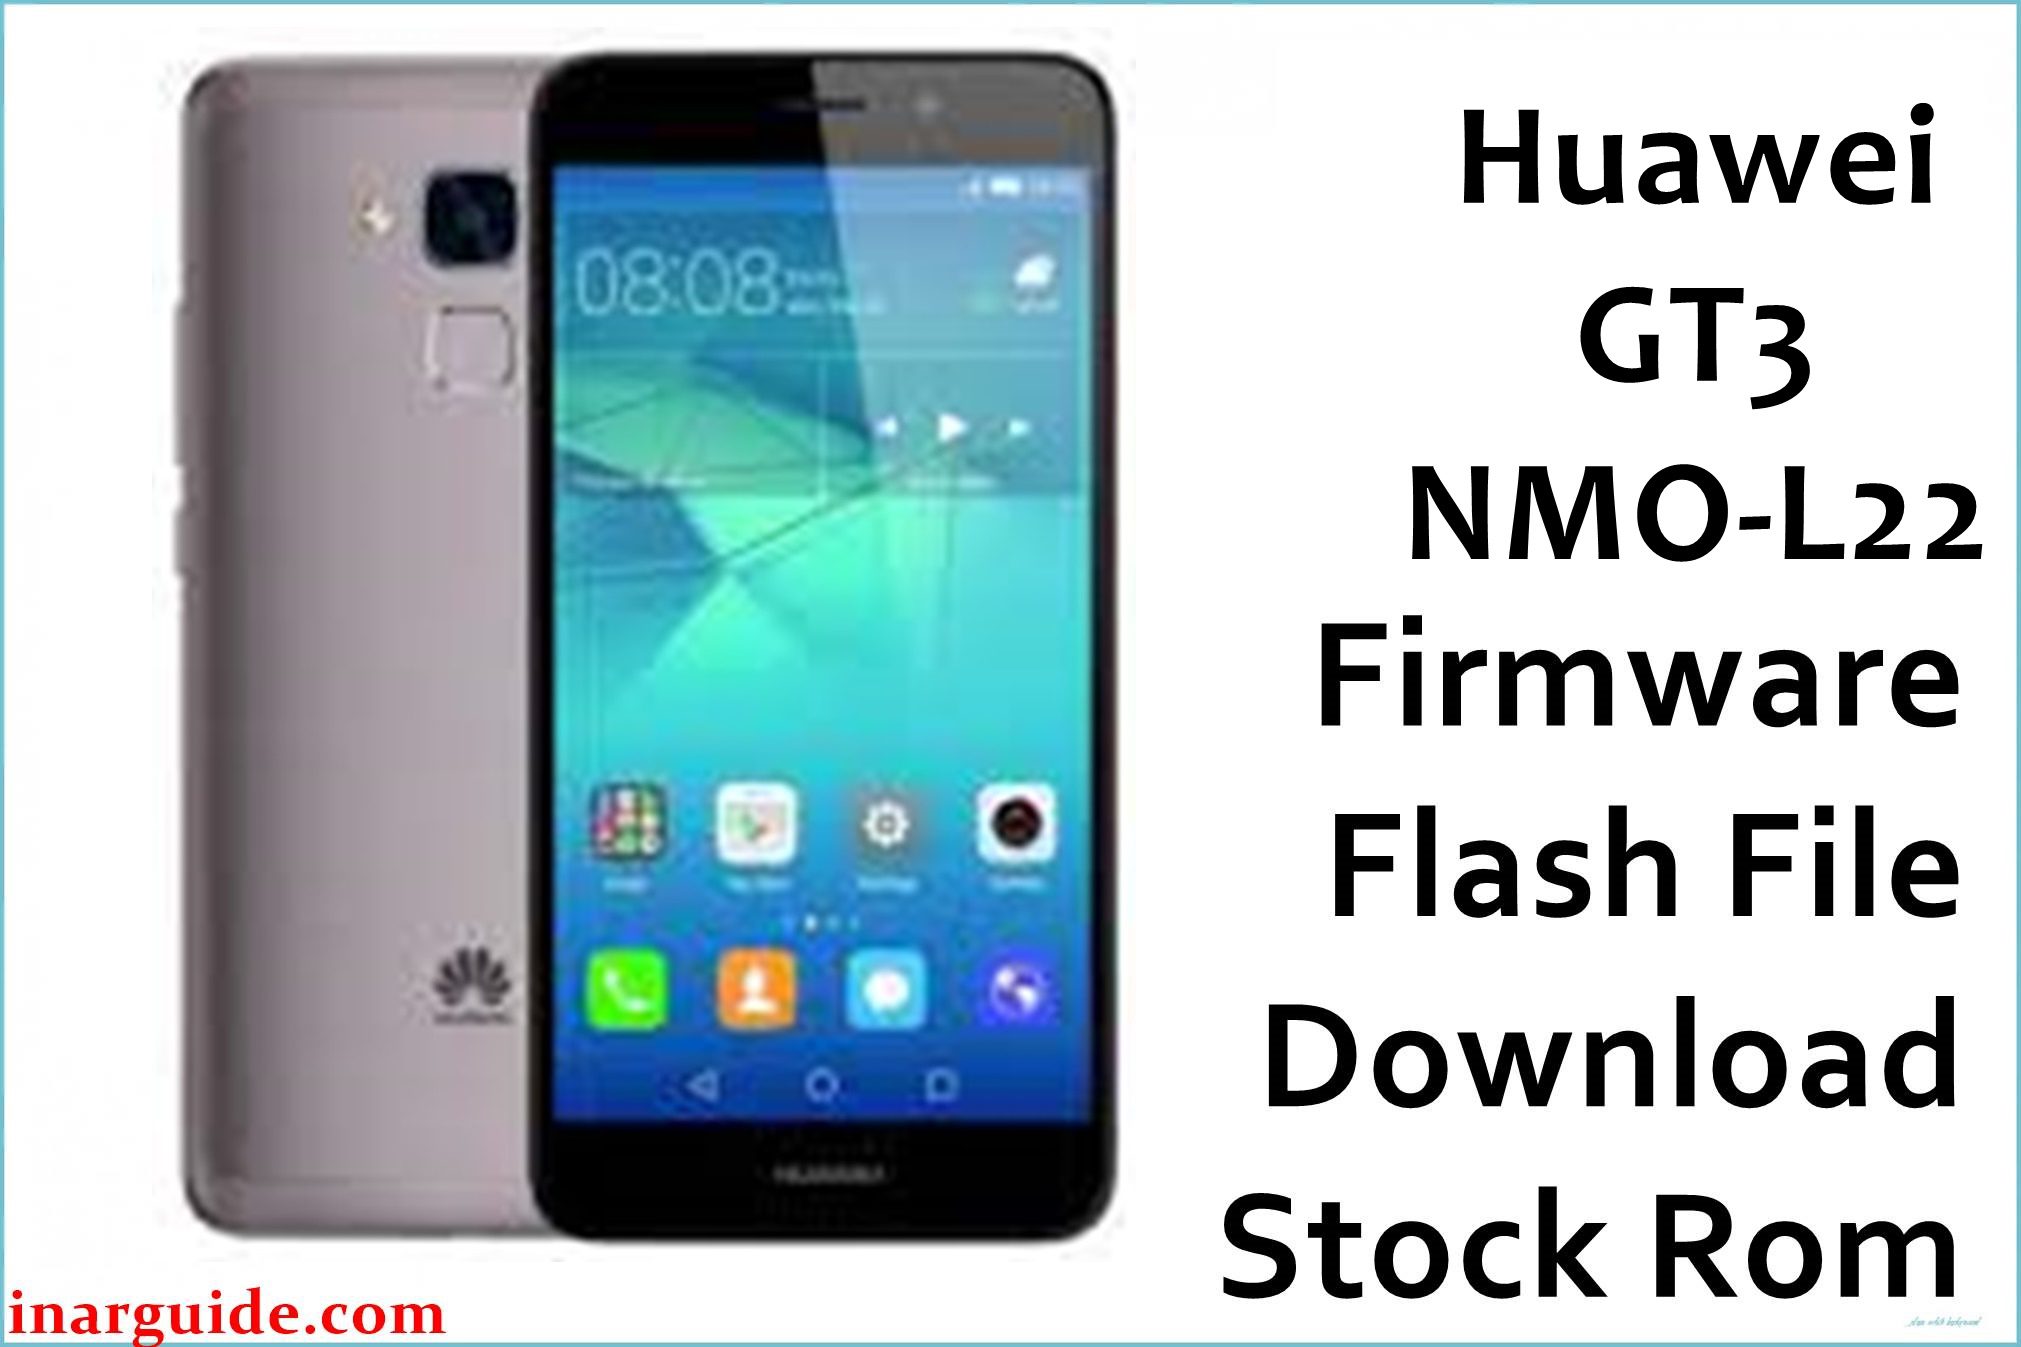 Huawei GT3 NMO L22